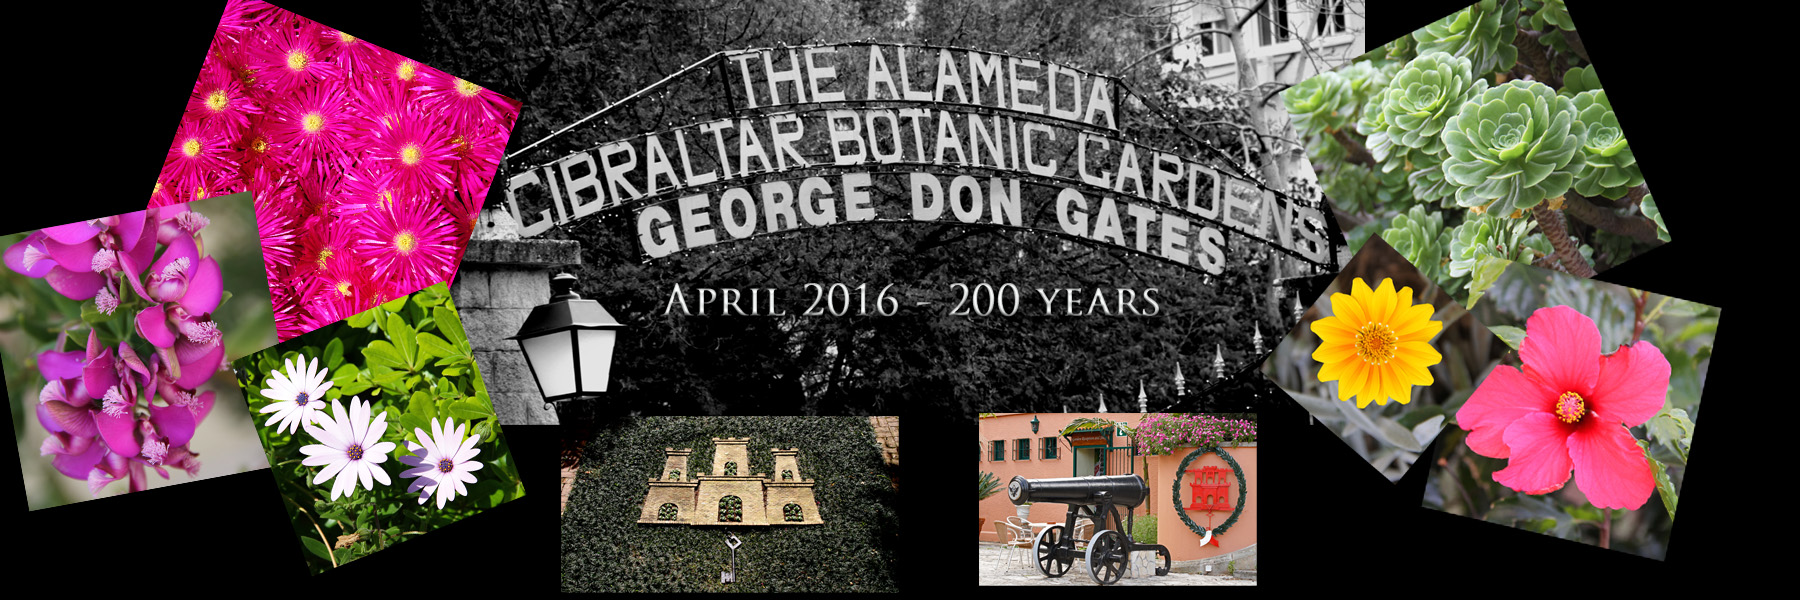 Botanical Gardens 200 years